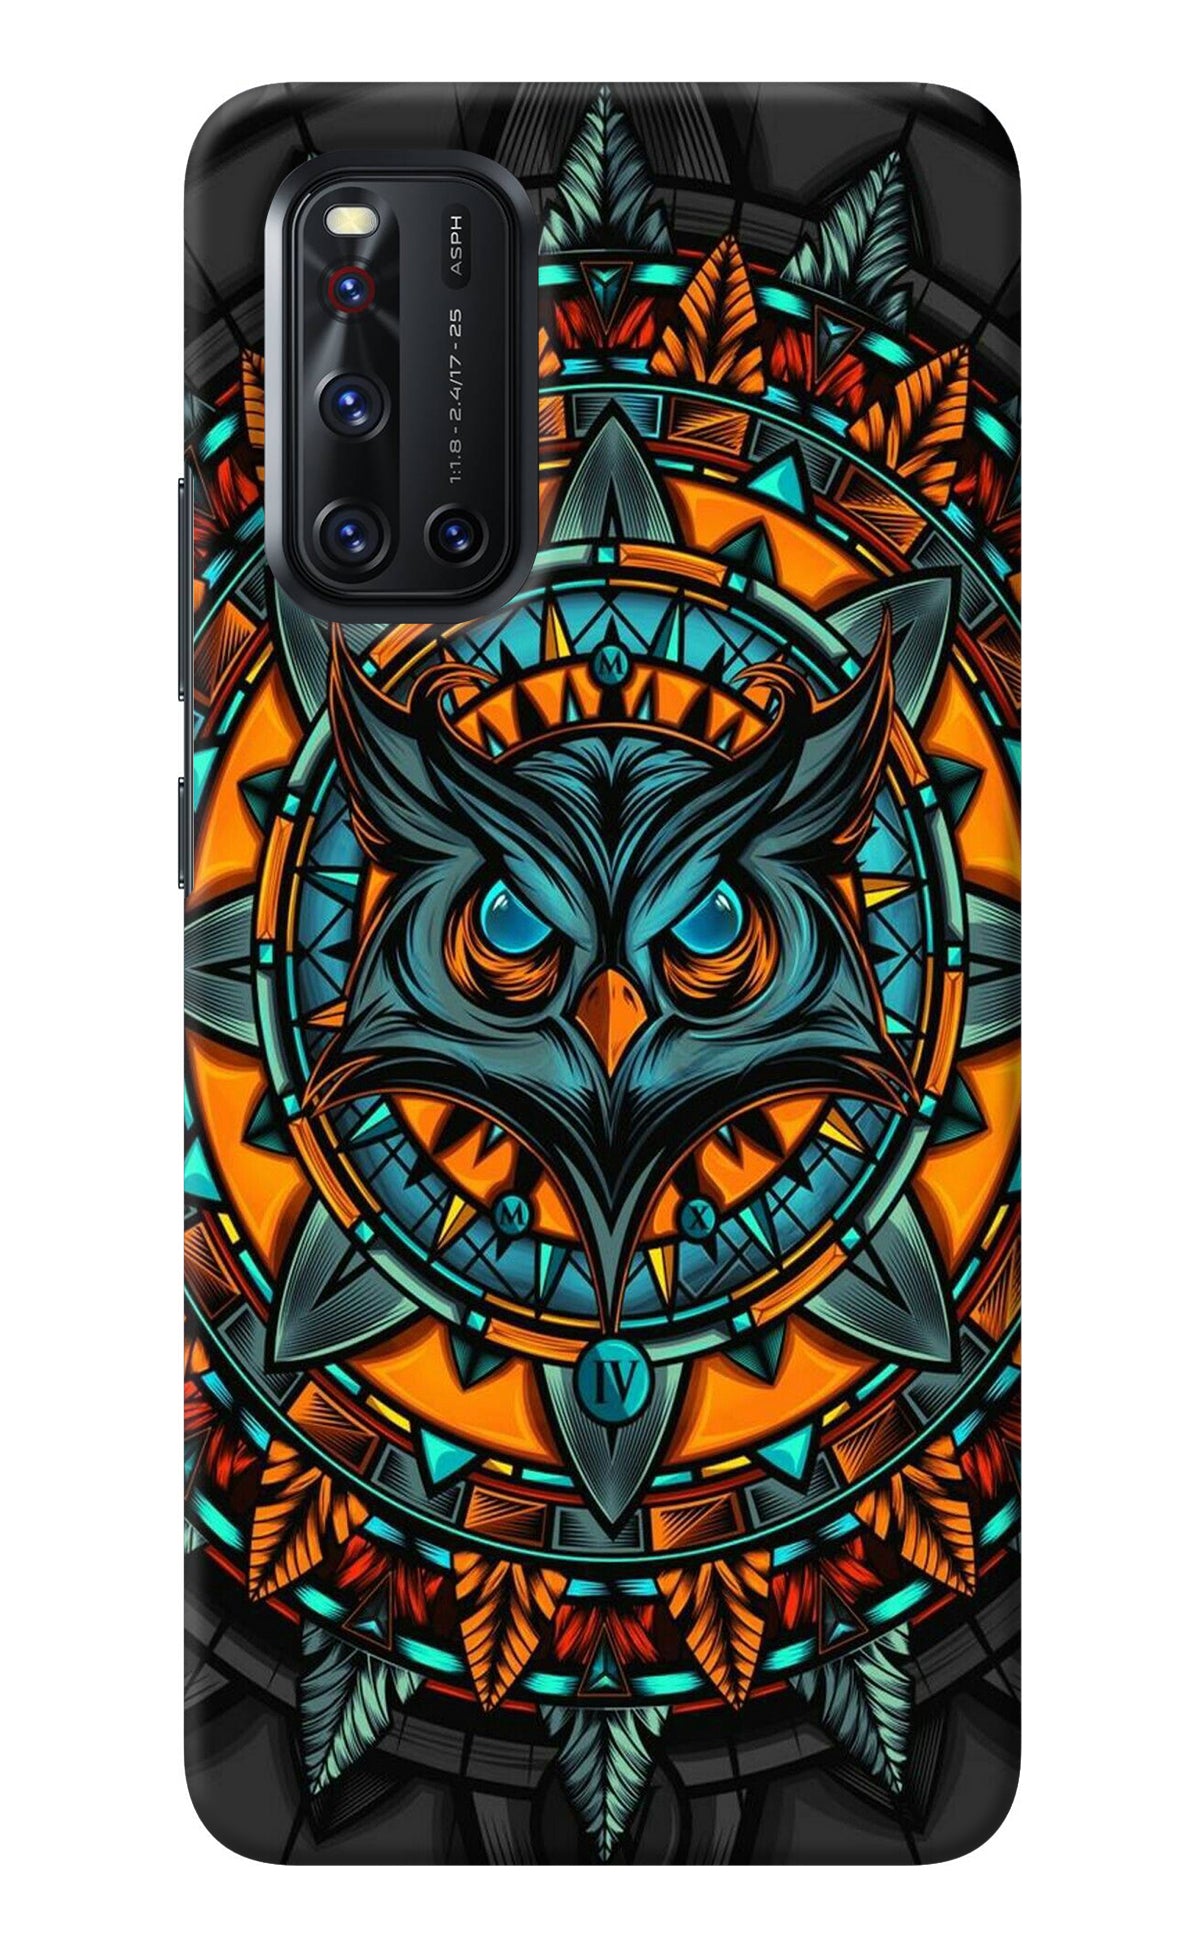 Angry Owl Art Vivo V19 Back Cover